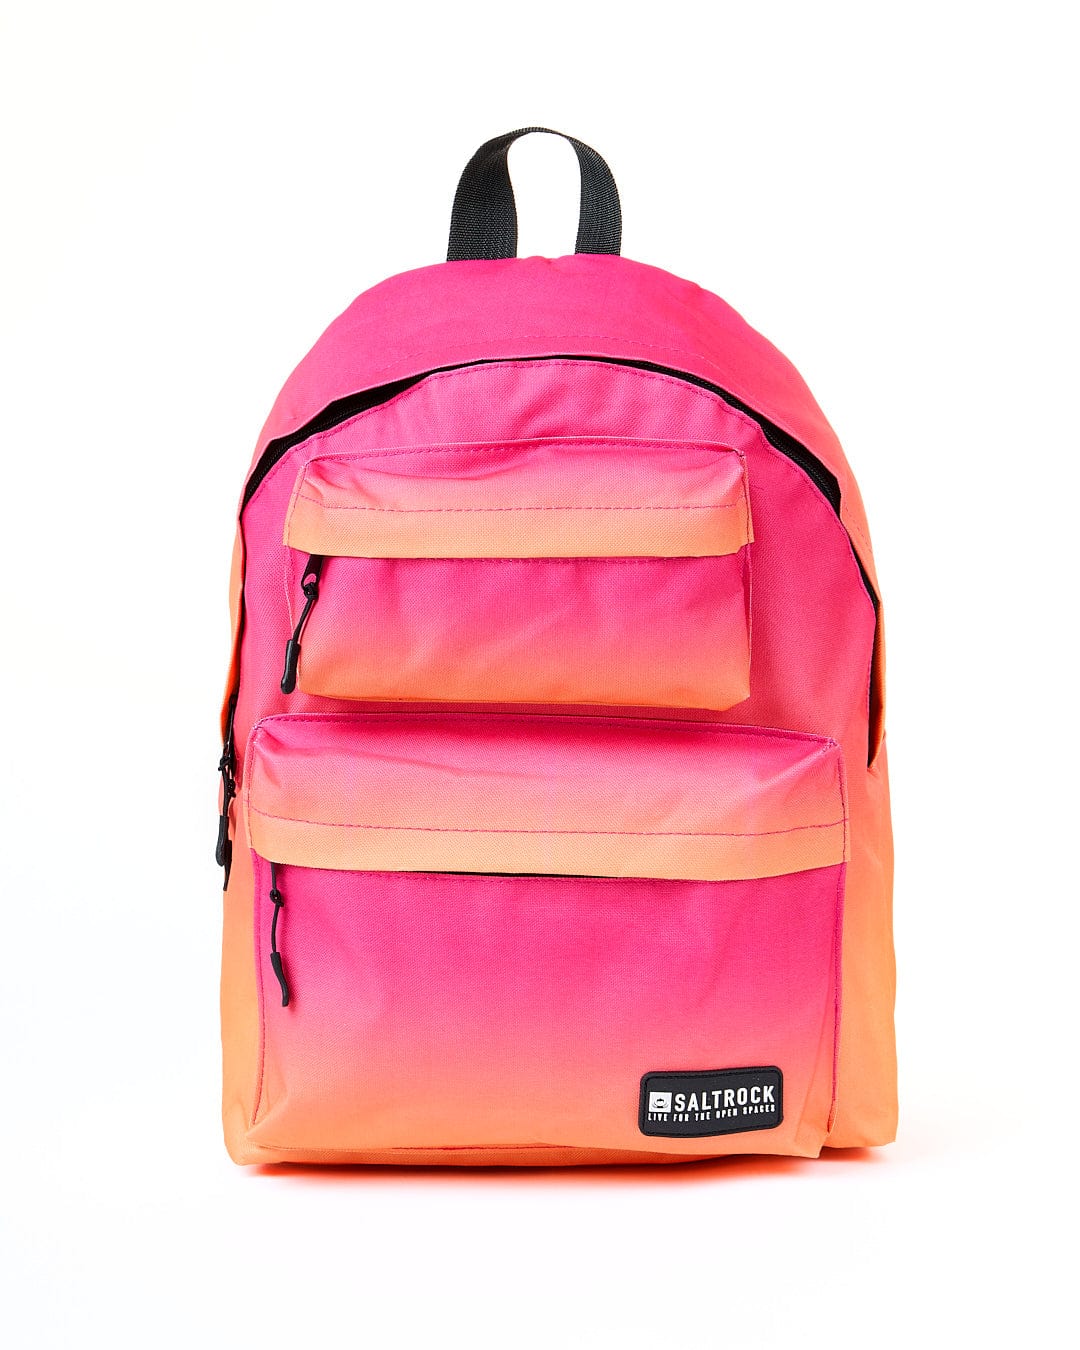 Uni-Fadeaway - Backpack - Pink/Orange